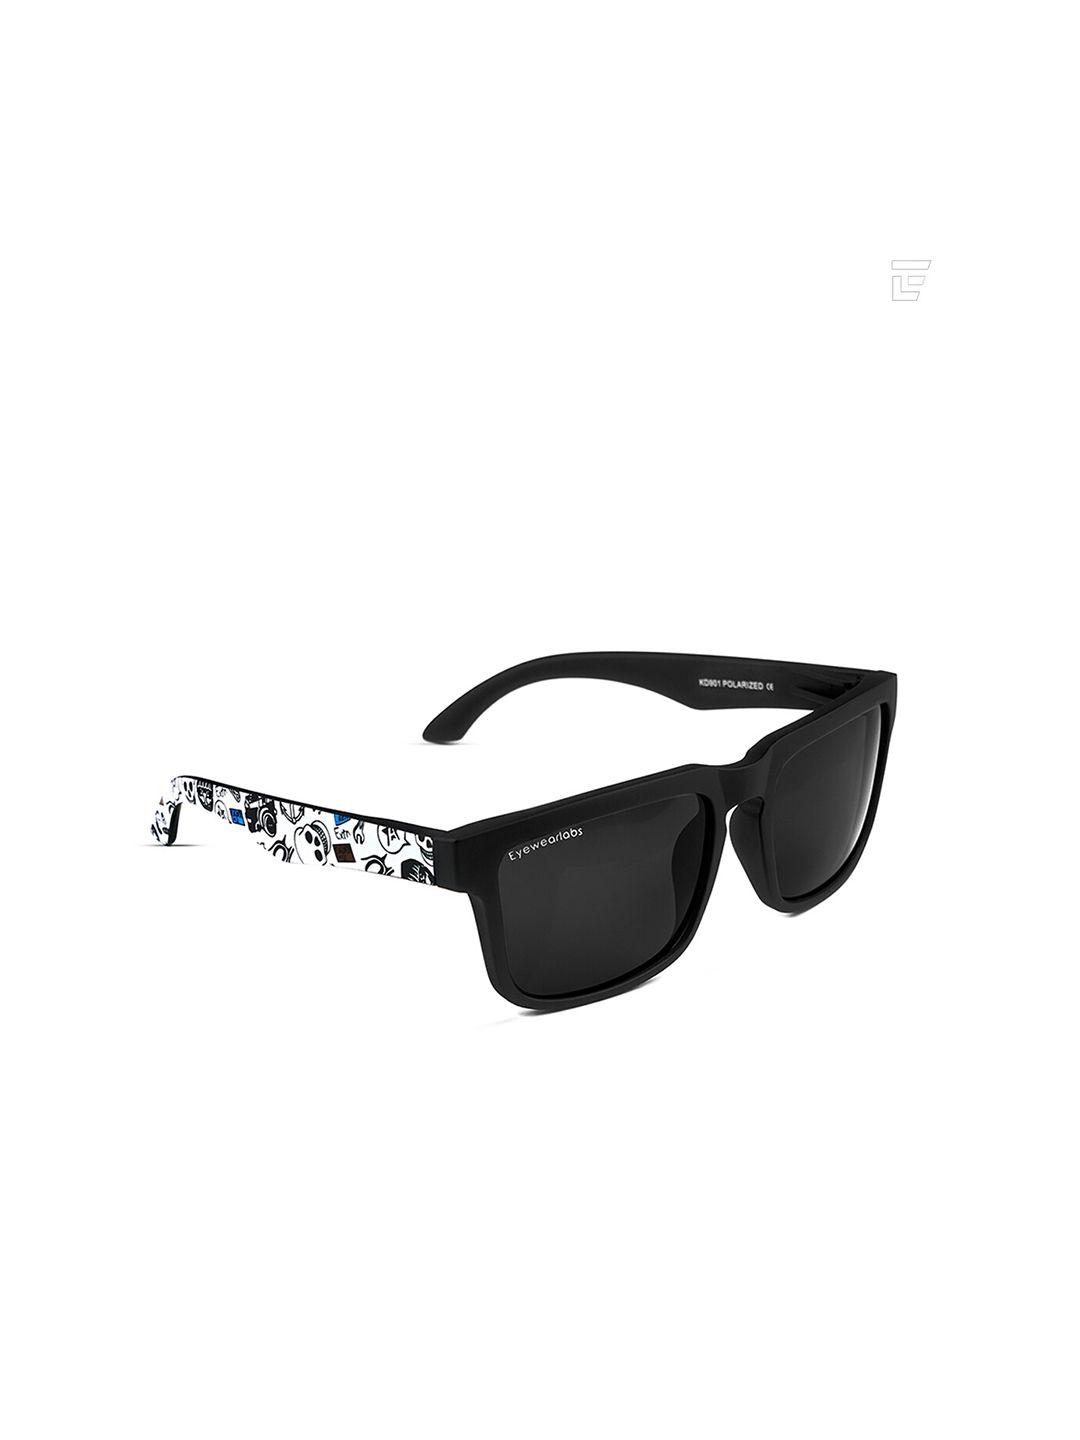 eyewearlabs unisex black lens & black wayfarer sunglasses with polarised and uv protected lens